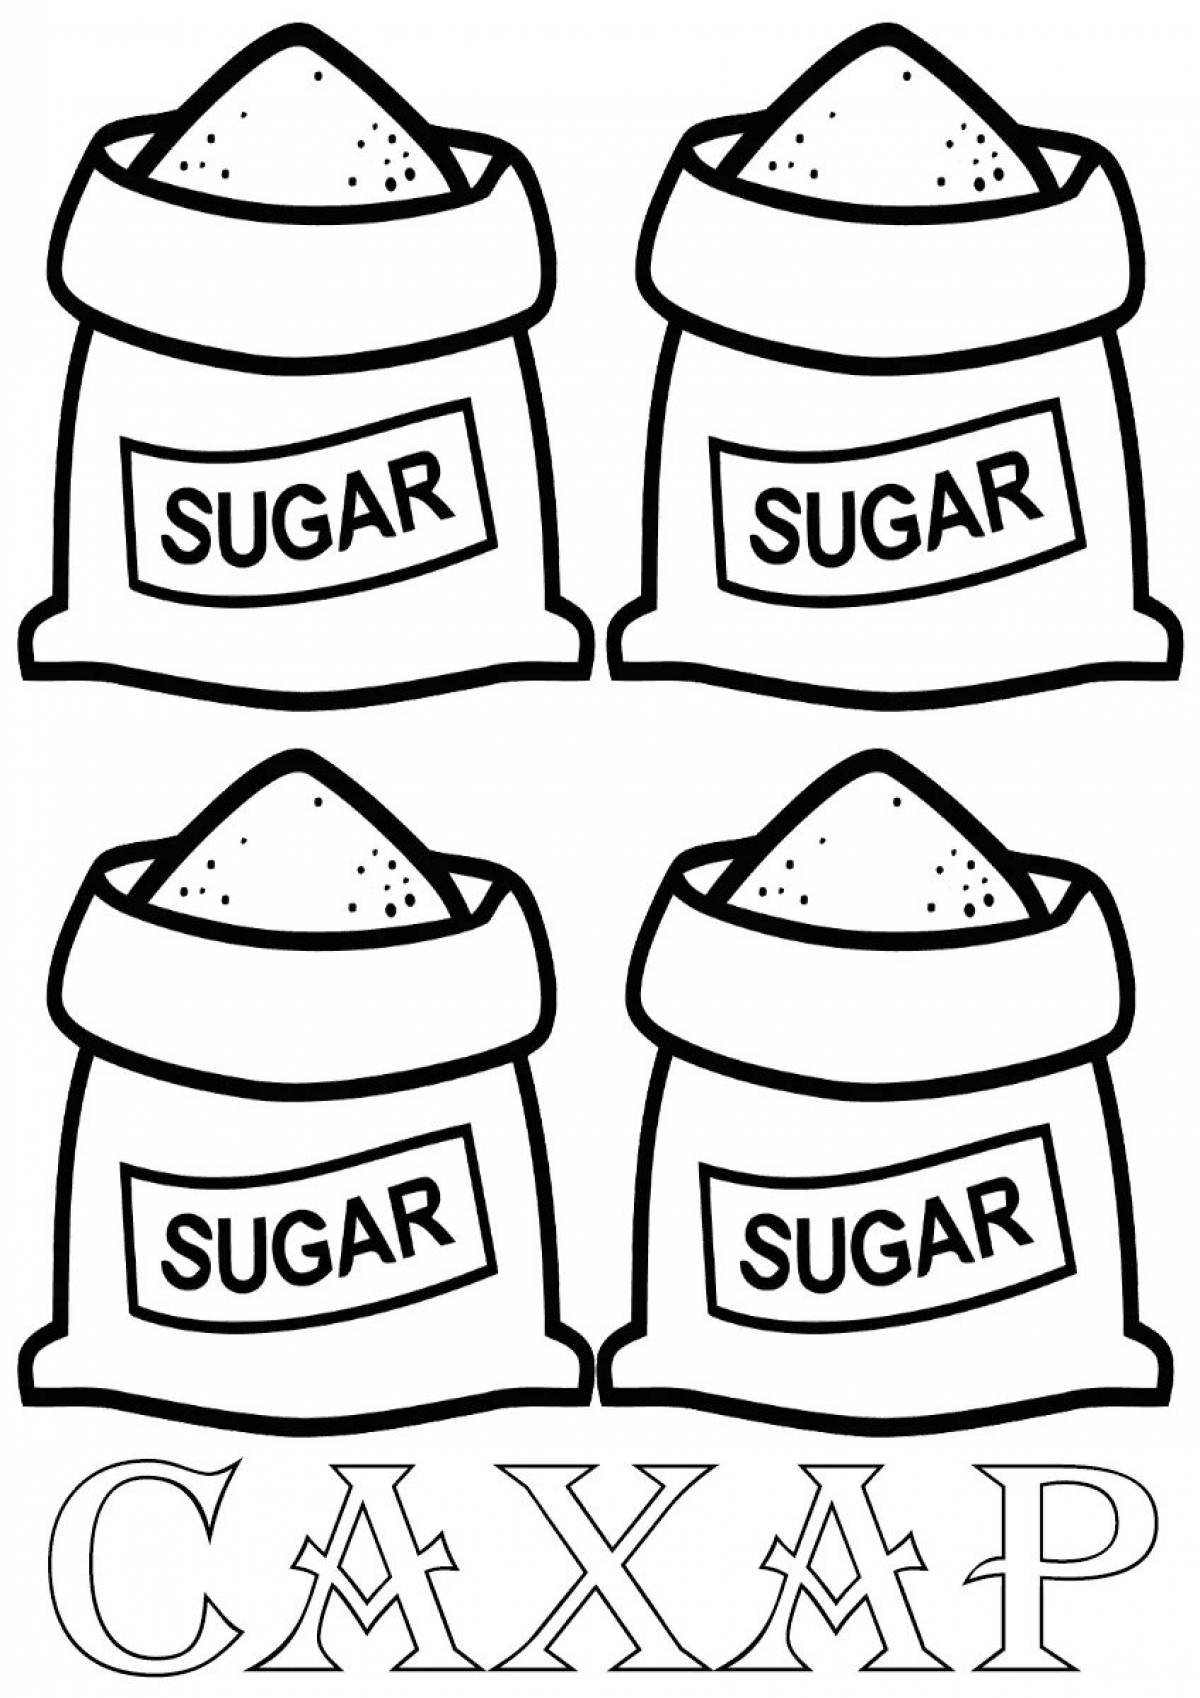 Superb sugar coloring page for preschoolers